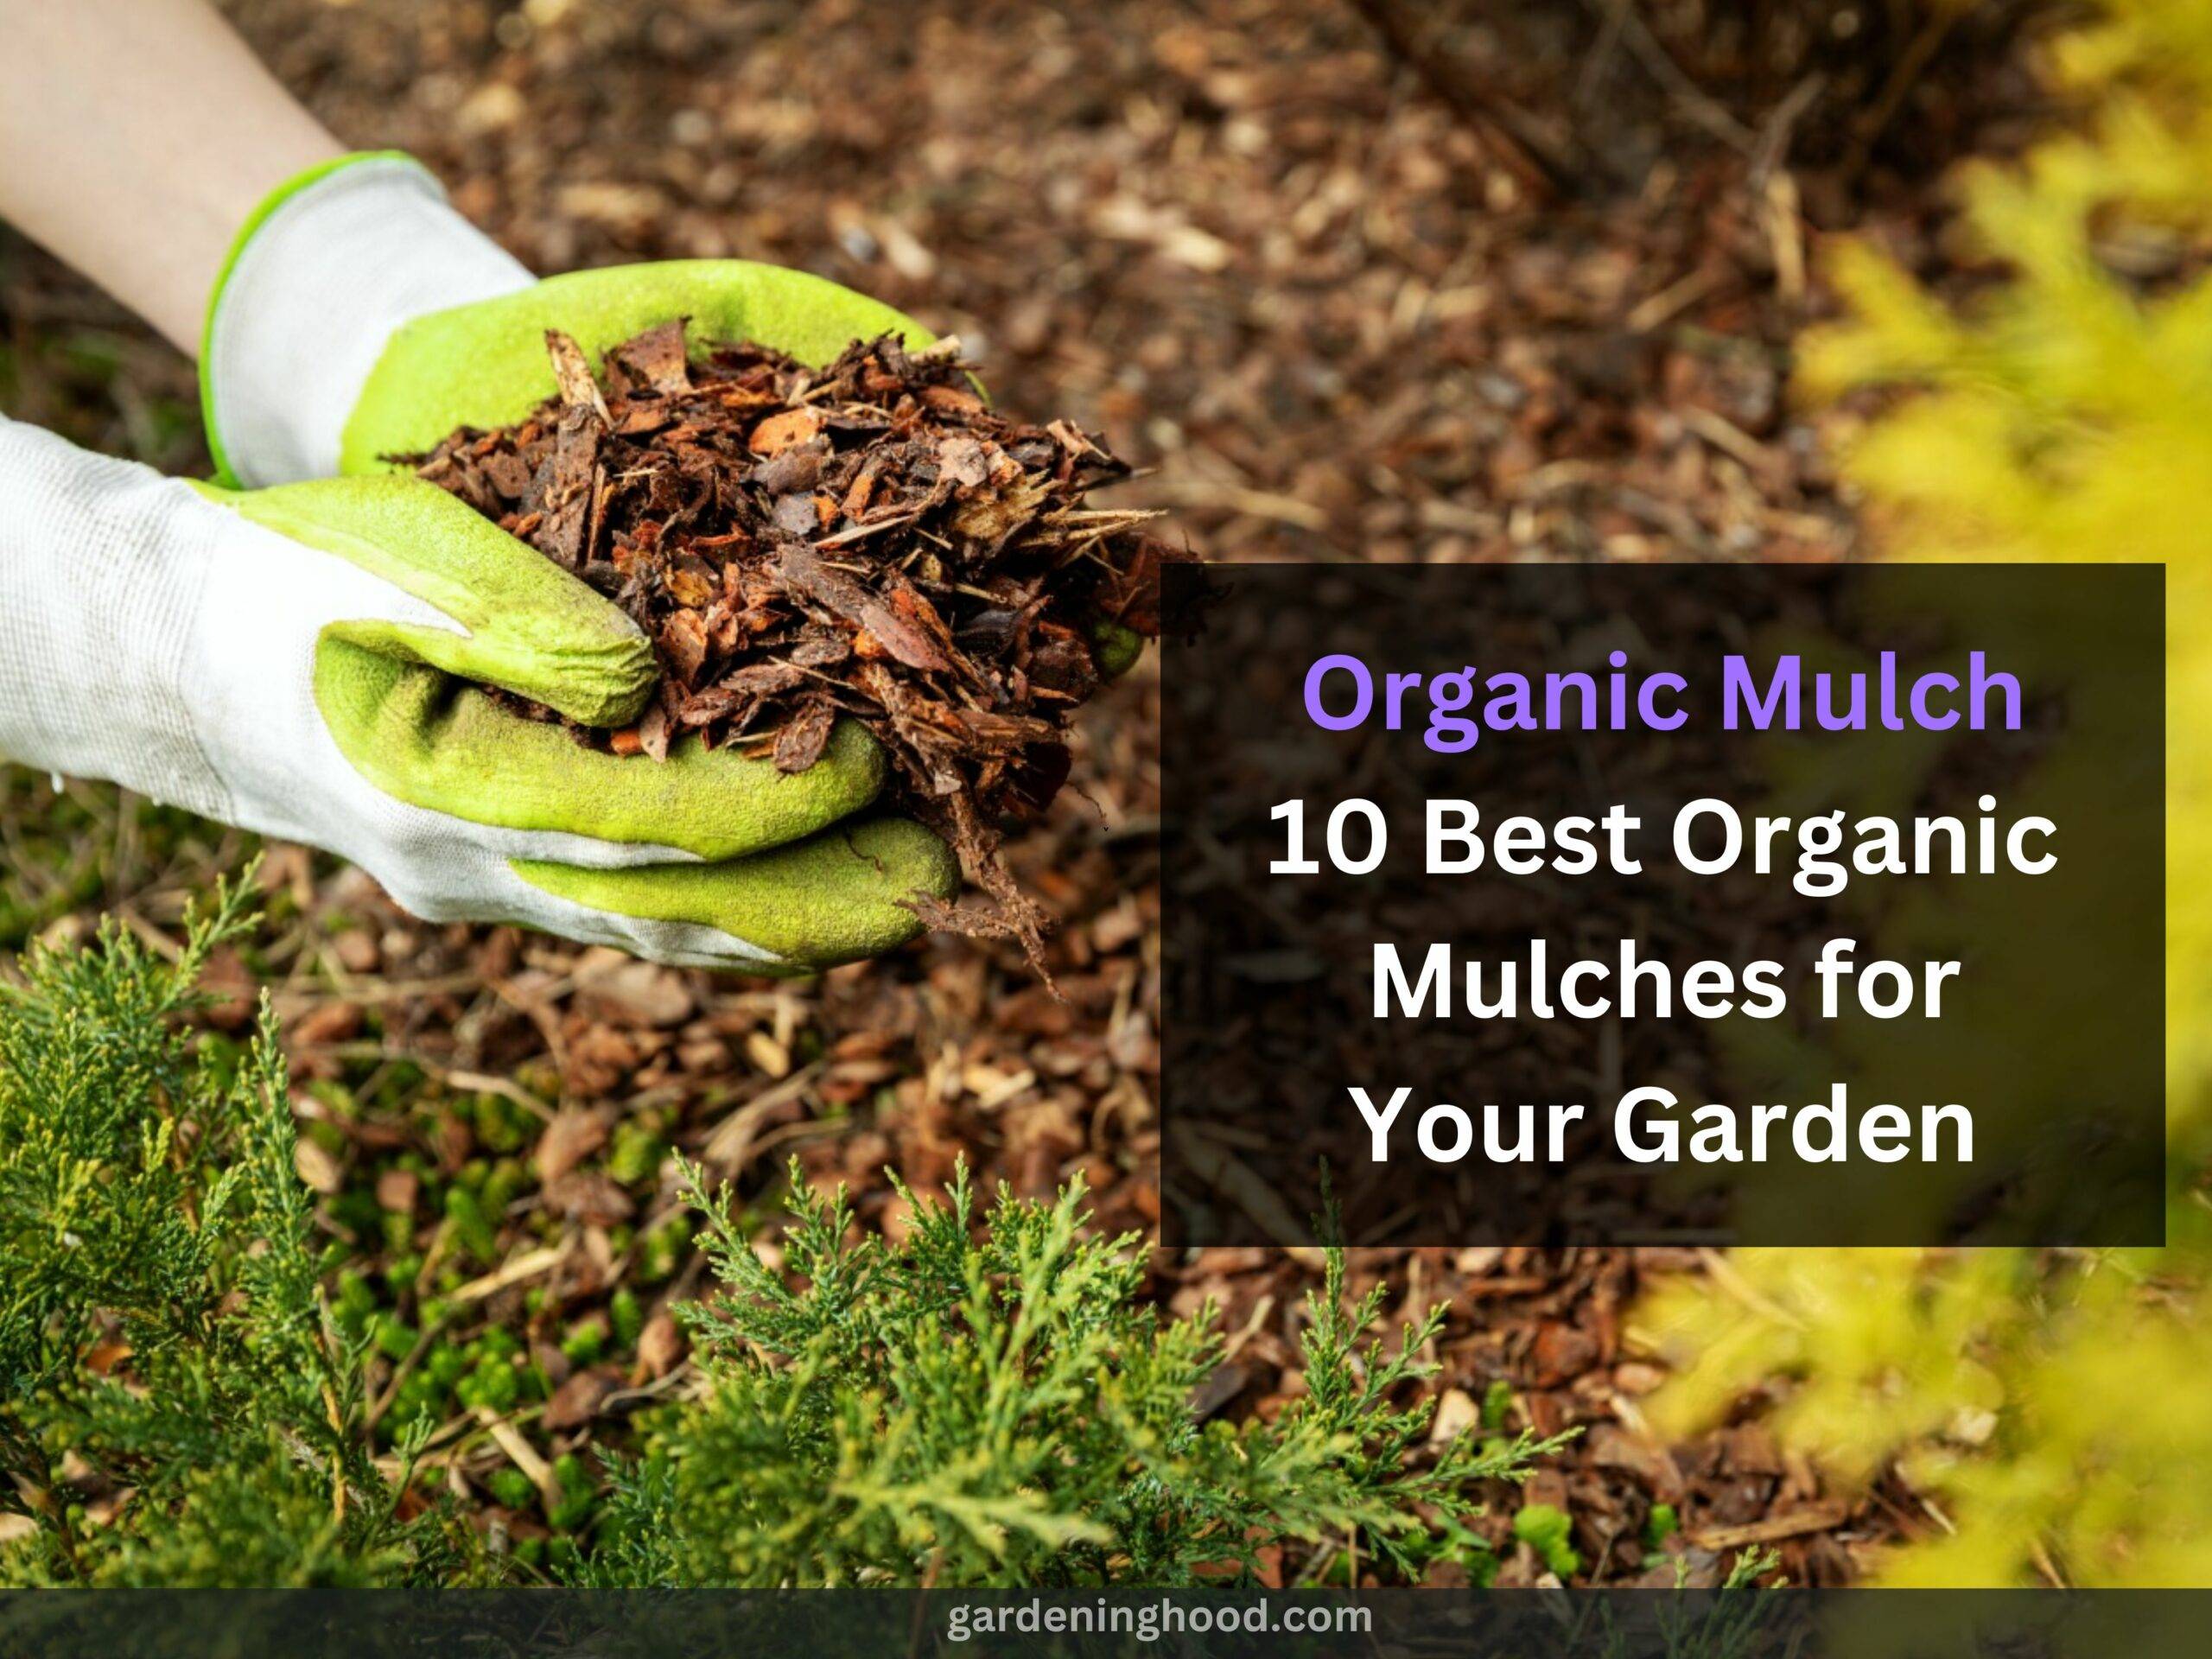 Organic Mulch: 10 Best Organic Mulches for Your Garden